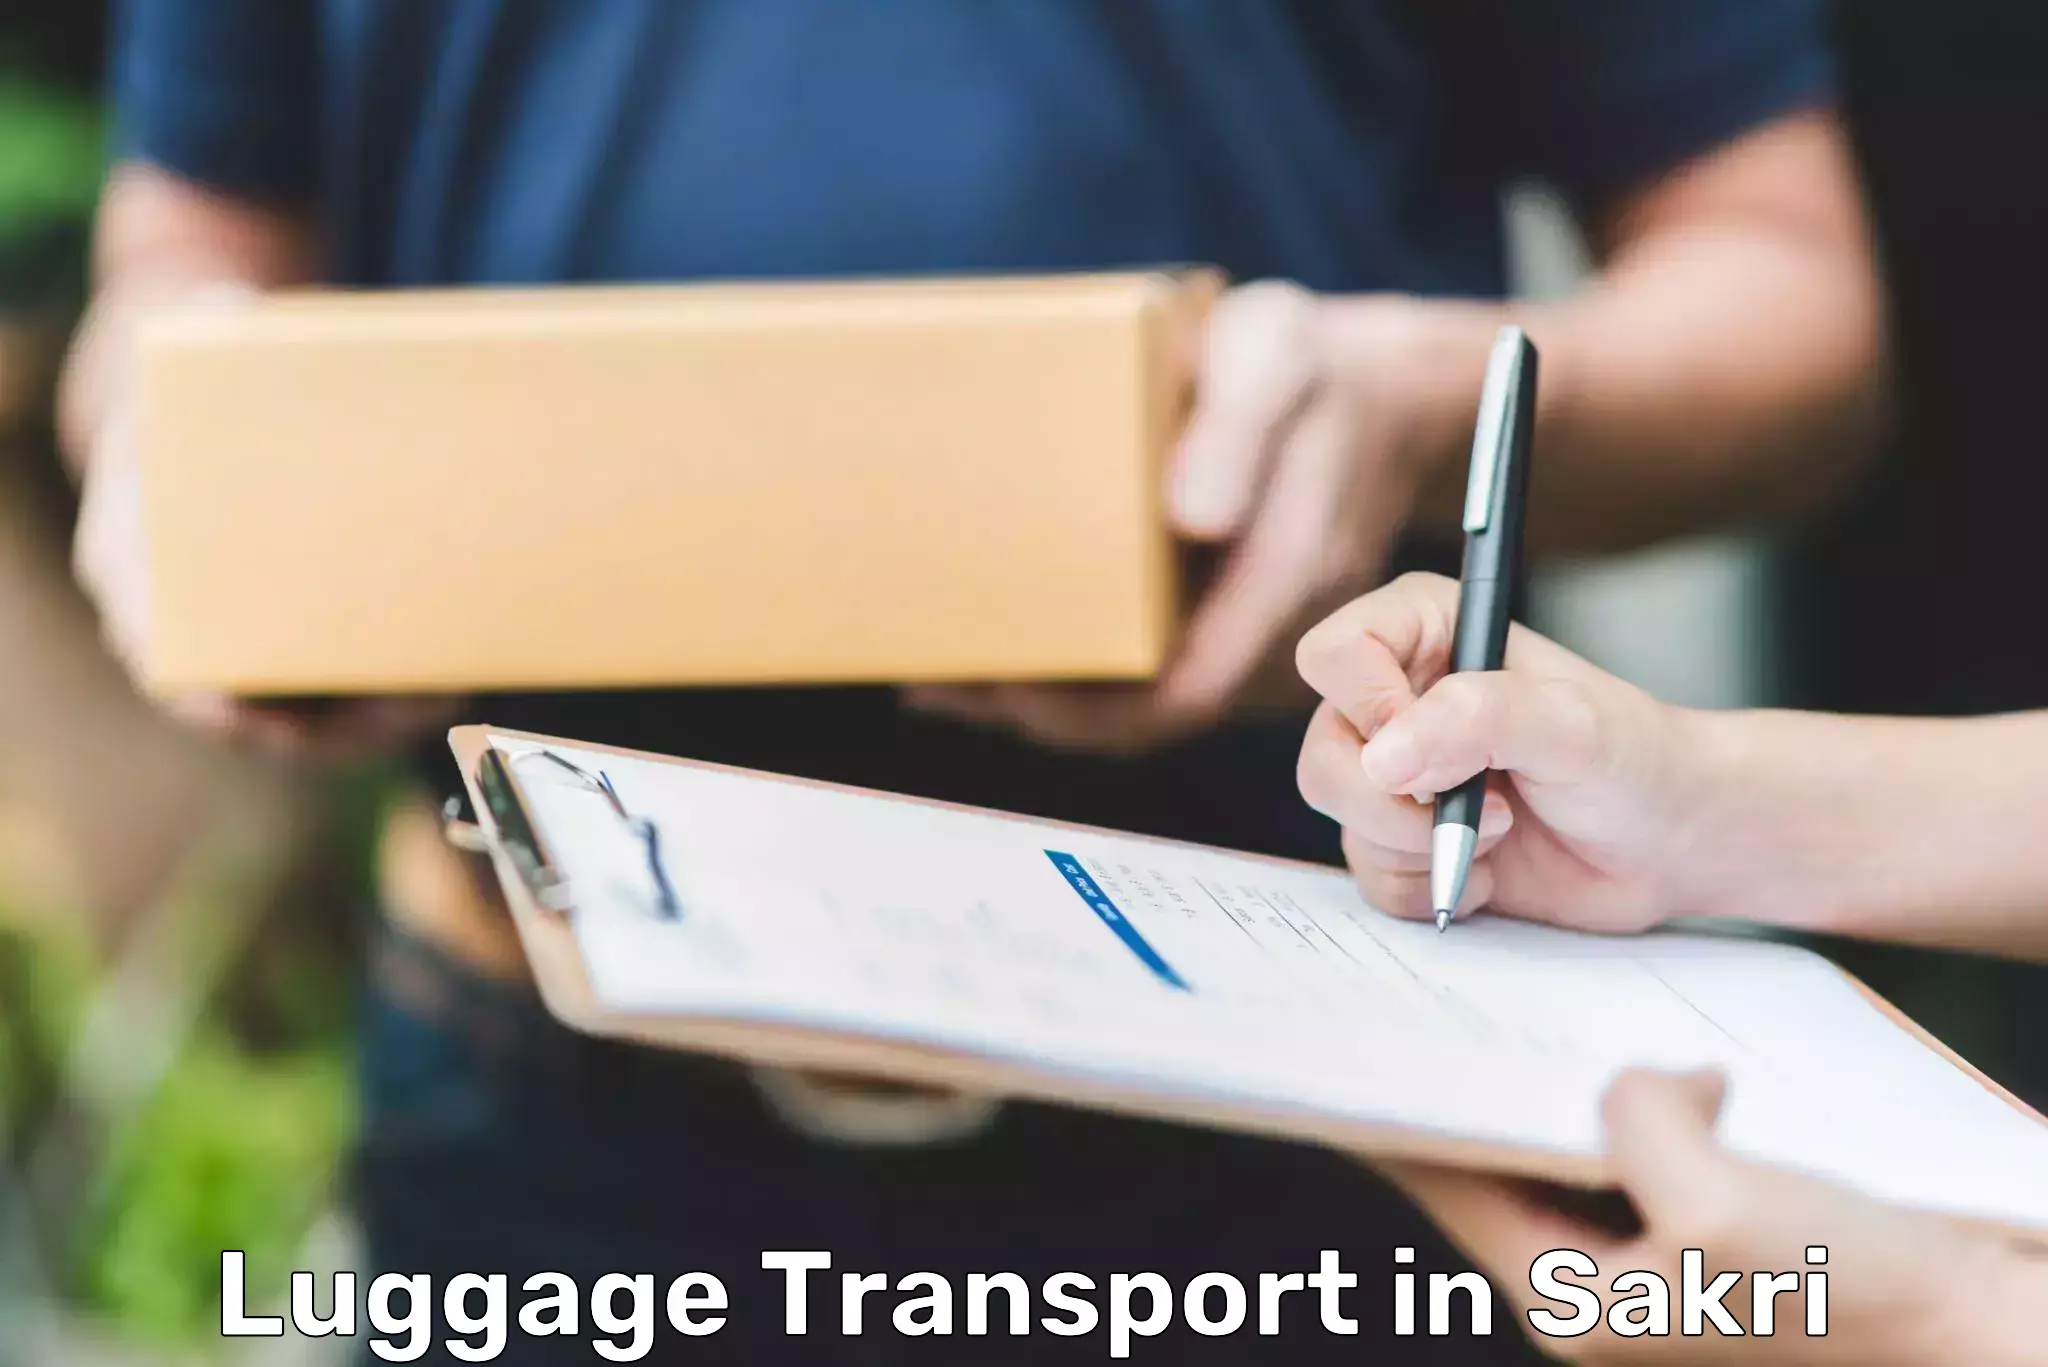 Luggage transport consulting in Sakri